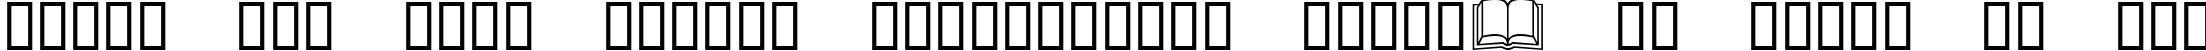 Пример написания шрифтом Lucida Icons текста на русском